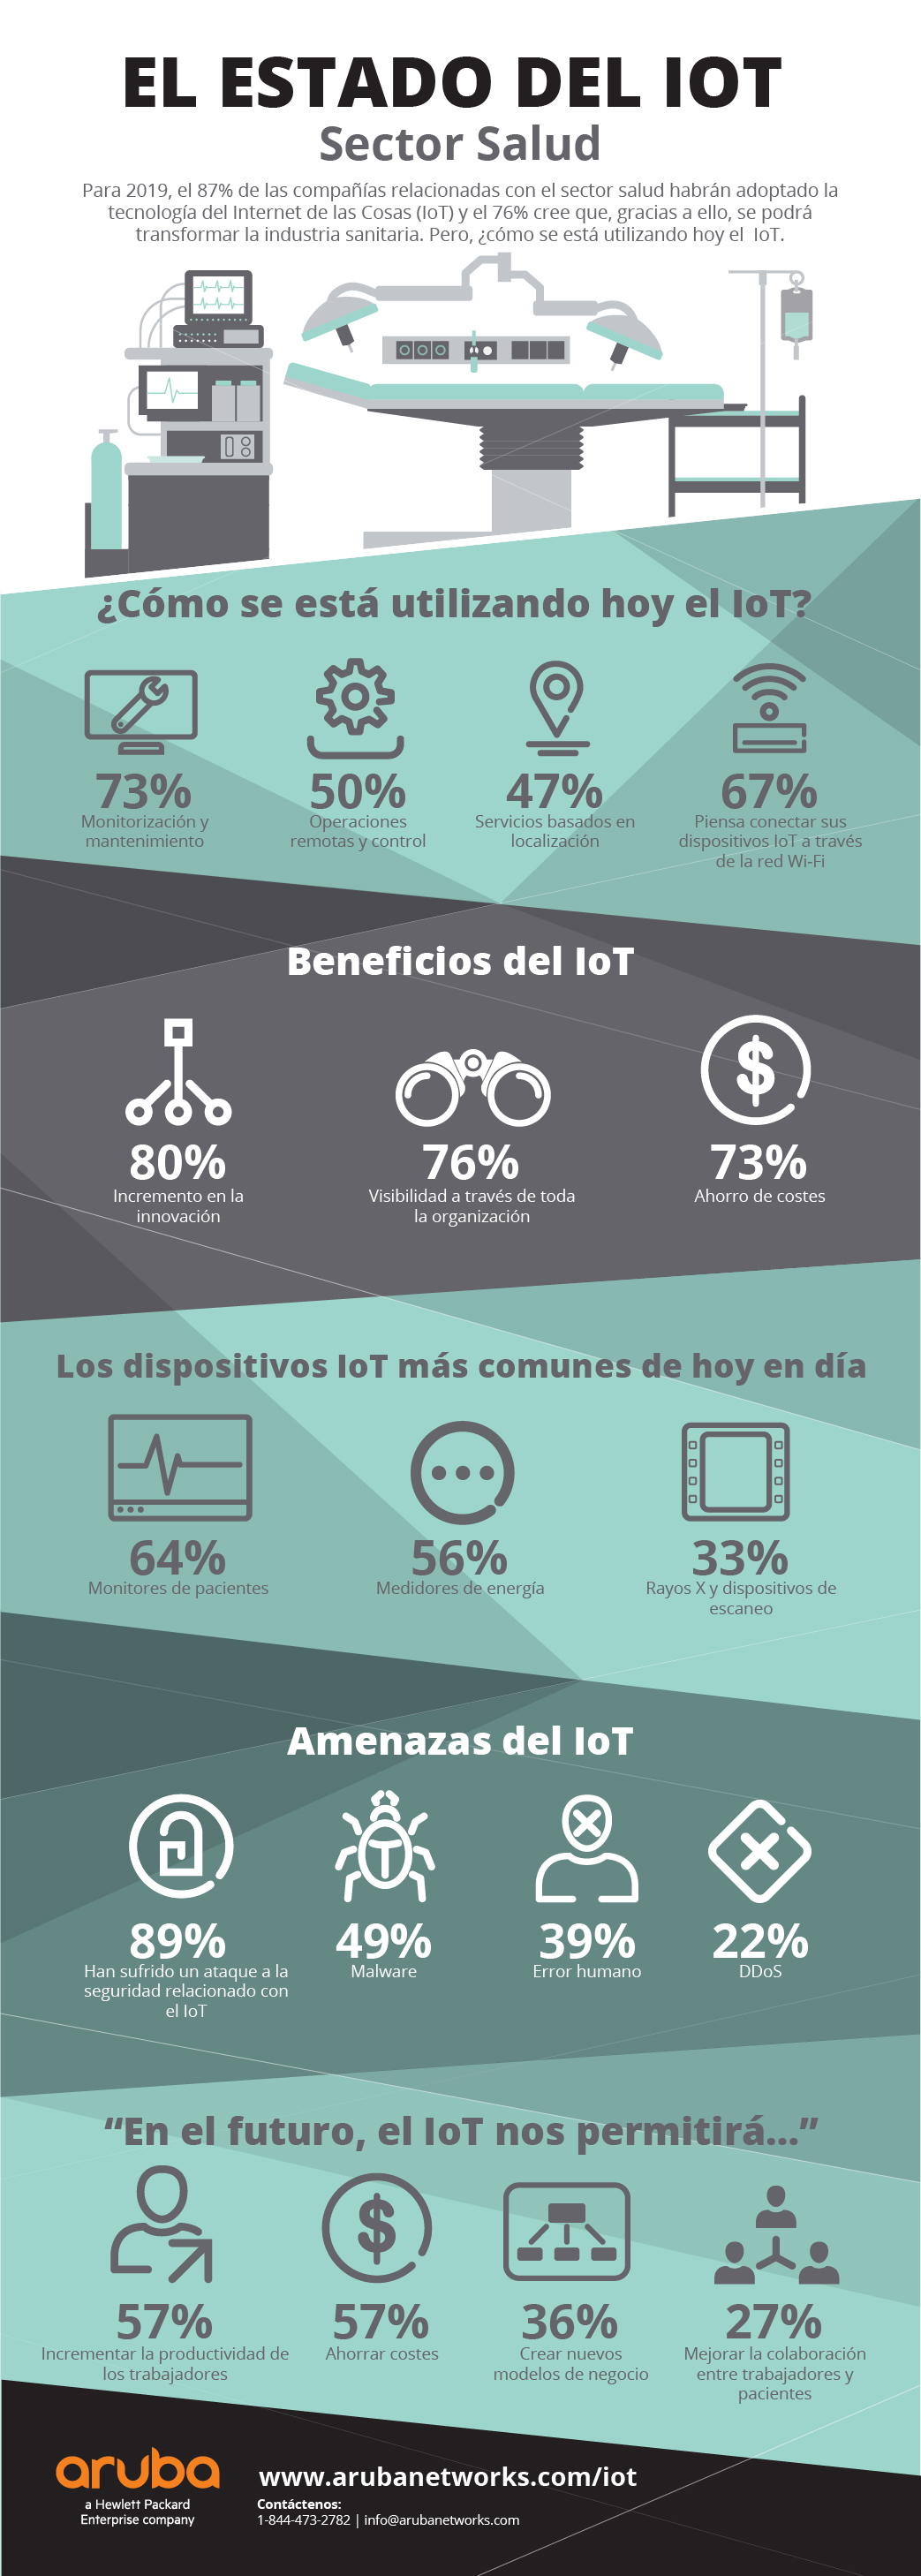 Aruba_IoT_Infographic_Spanish-04